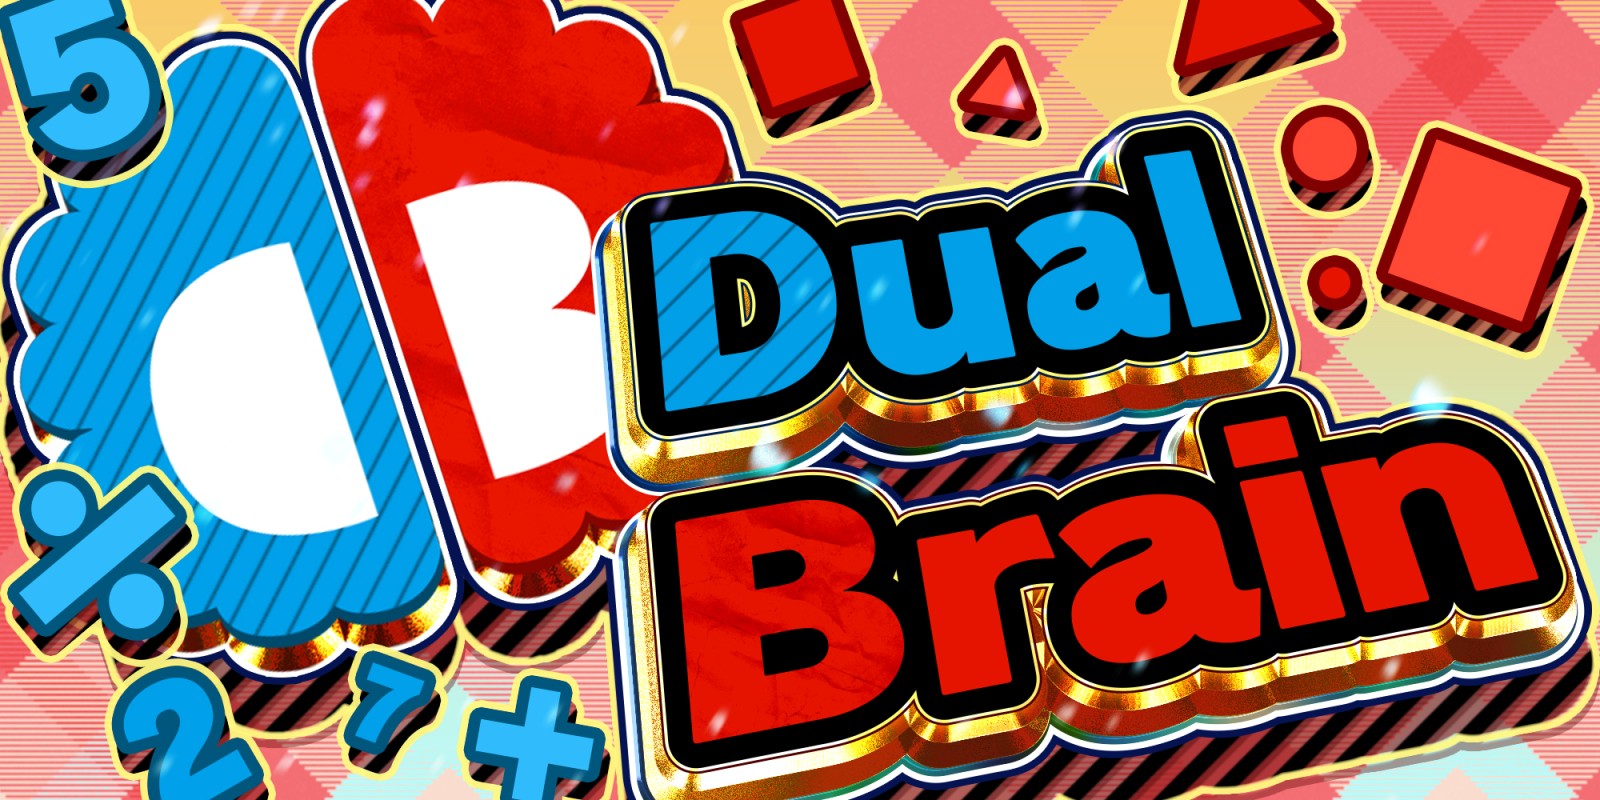 Dual Brain Complete Edition